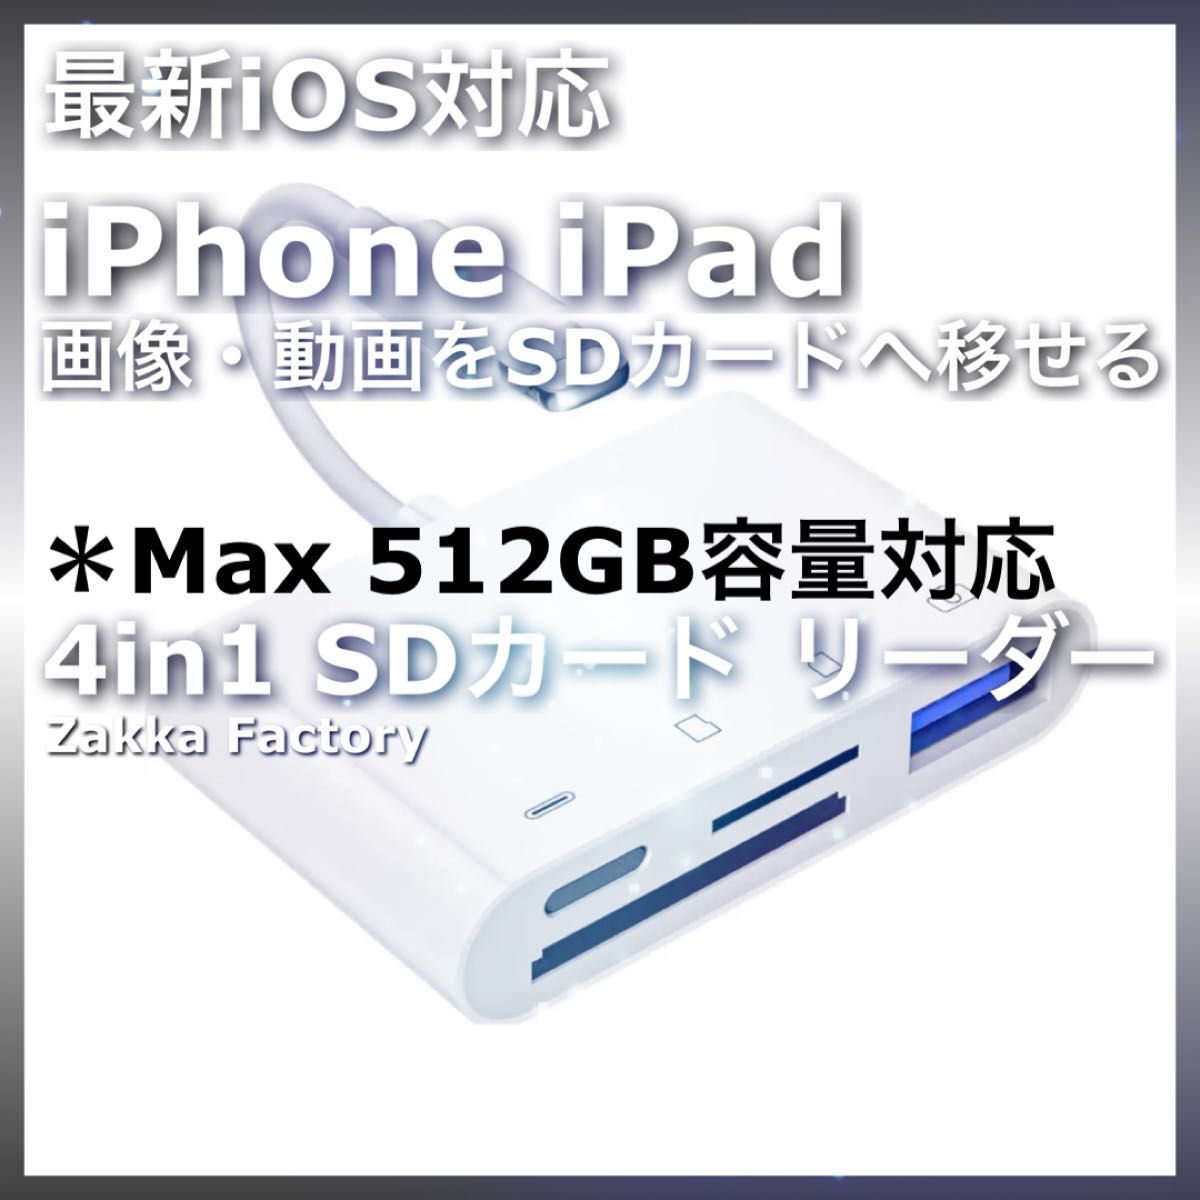 4in1 iphone ipad アイフォン アイホン アイパッド SDカードリーダー 映像 写真 動画 データ保存 転送